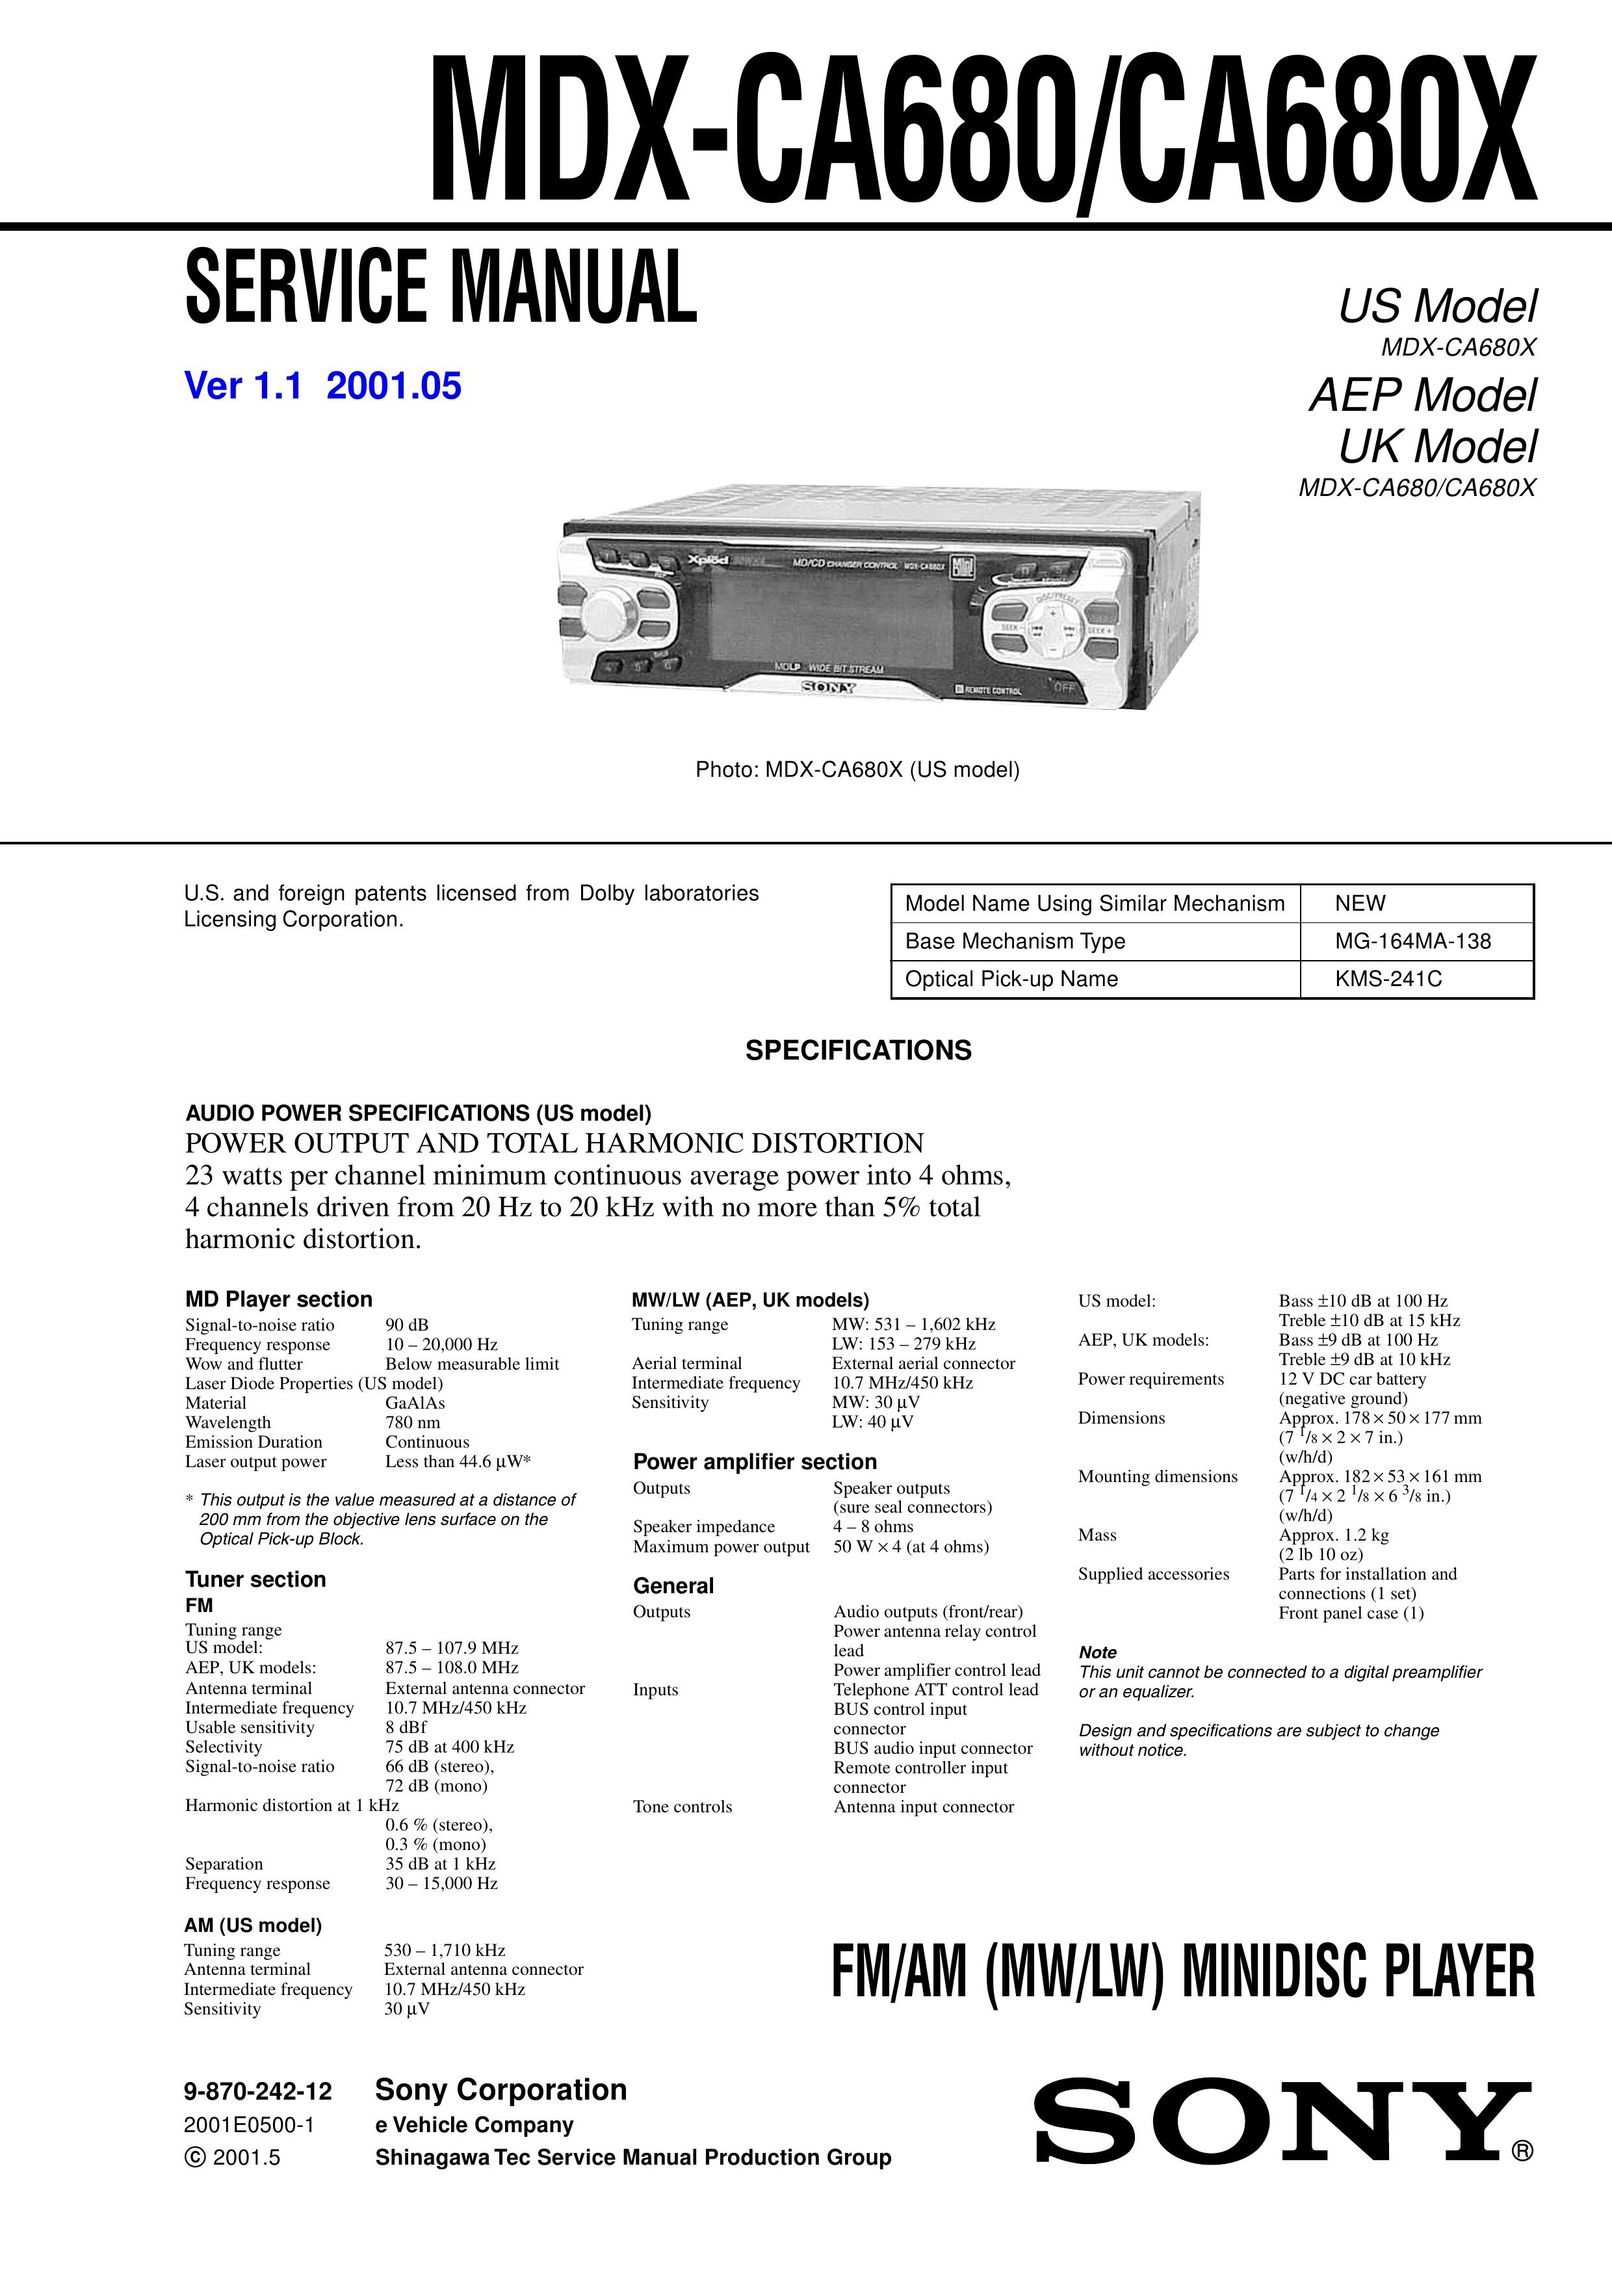 Sony MDX-CA680 MiniDisc Player User Manual